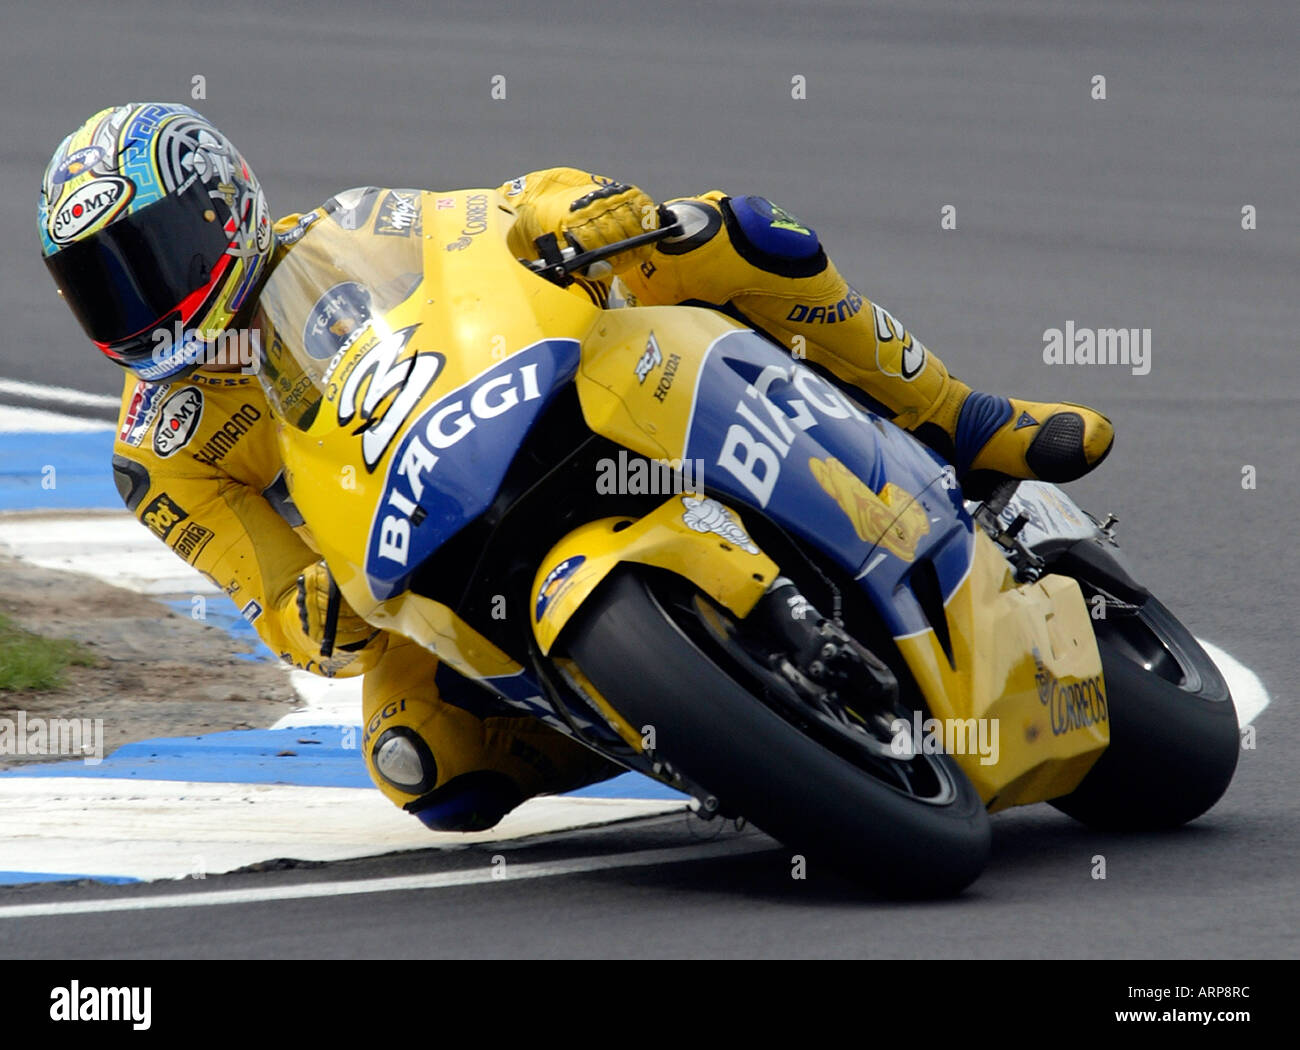 Max Biaggi, Moto GP rider for the 2004 Camel Honda team Stock Photo - Alamy